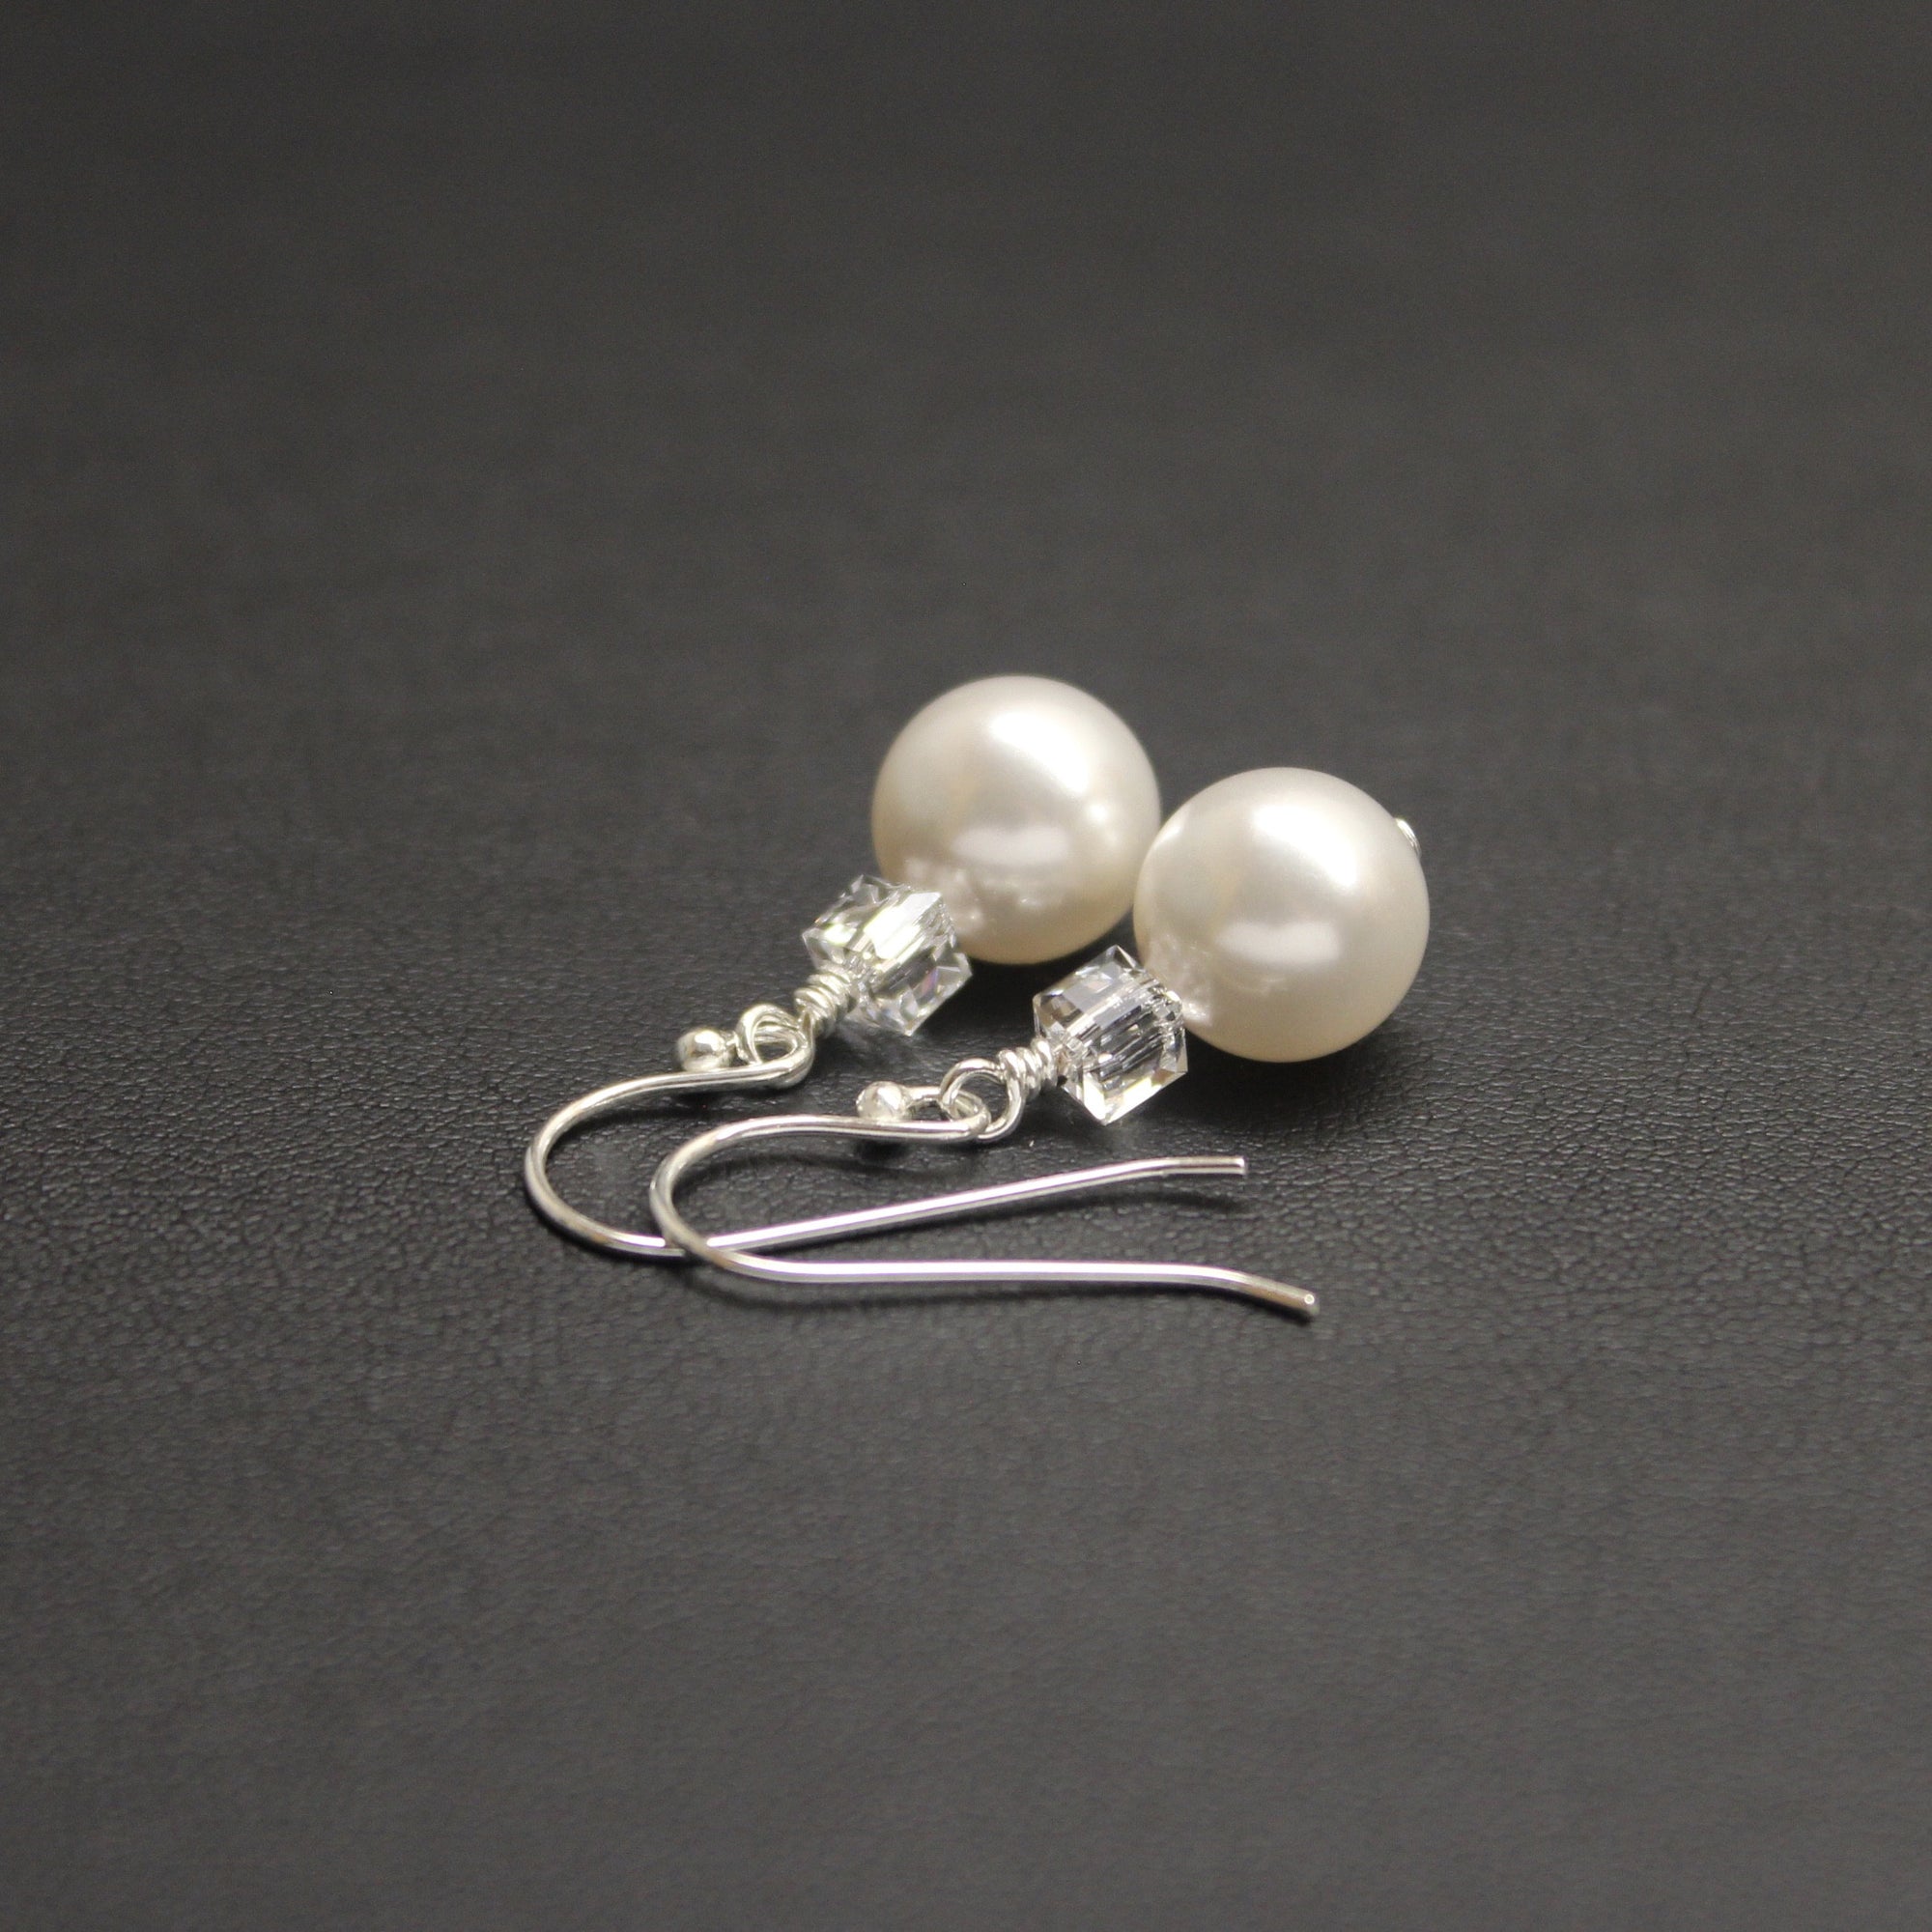 Tango Crystal Cube/Pearl Earrings (White)